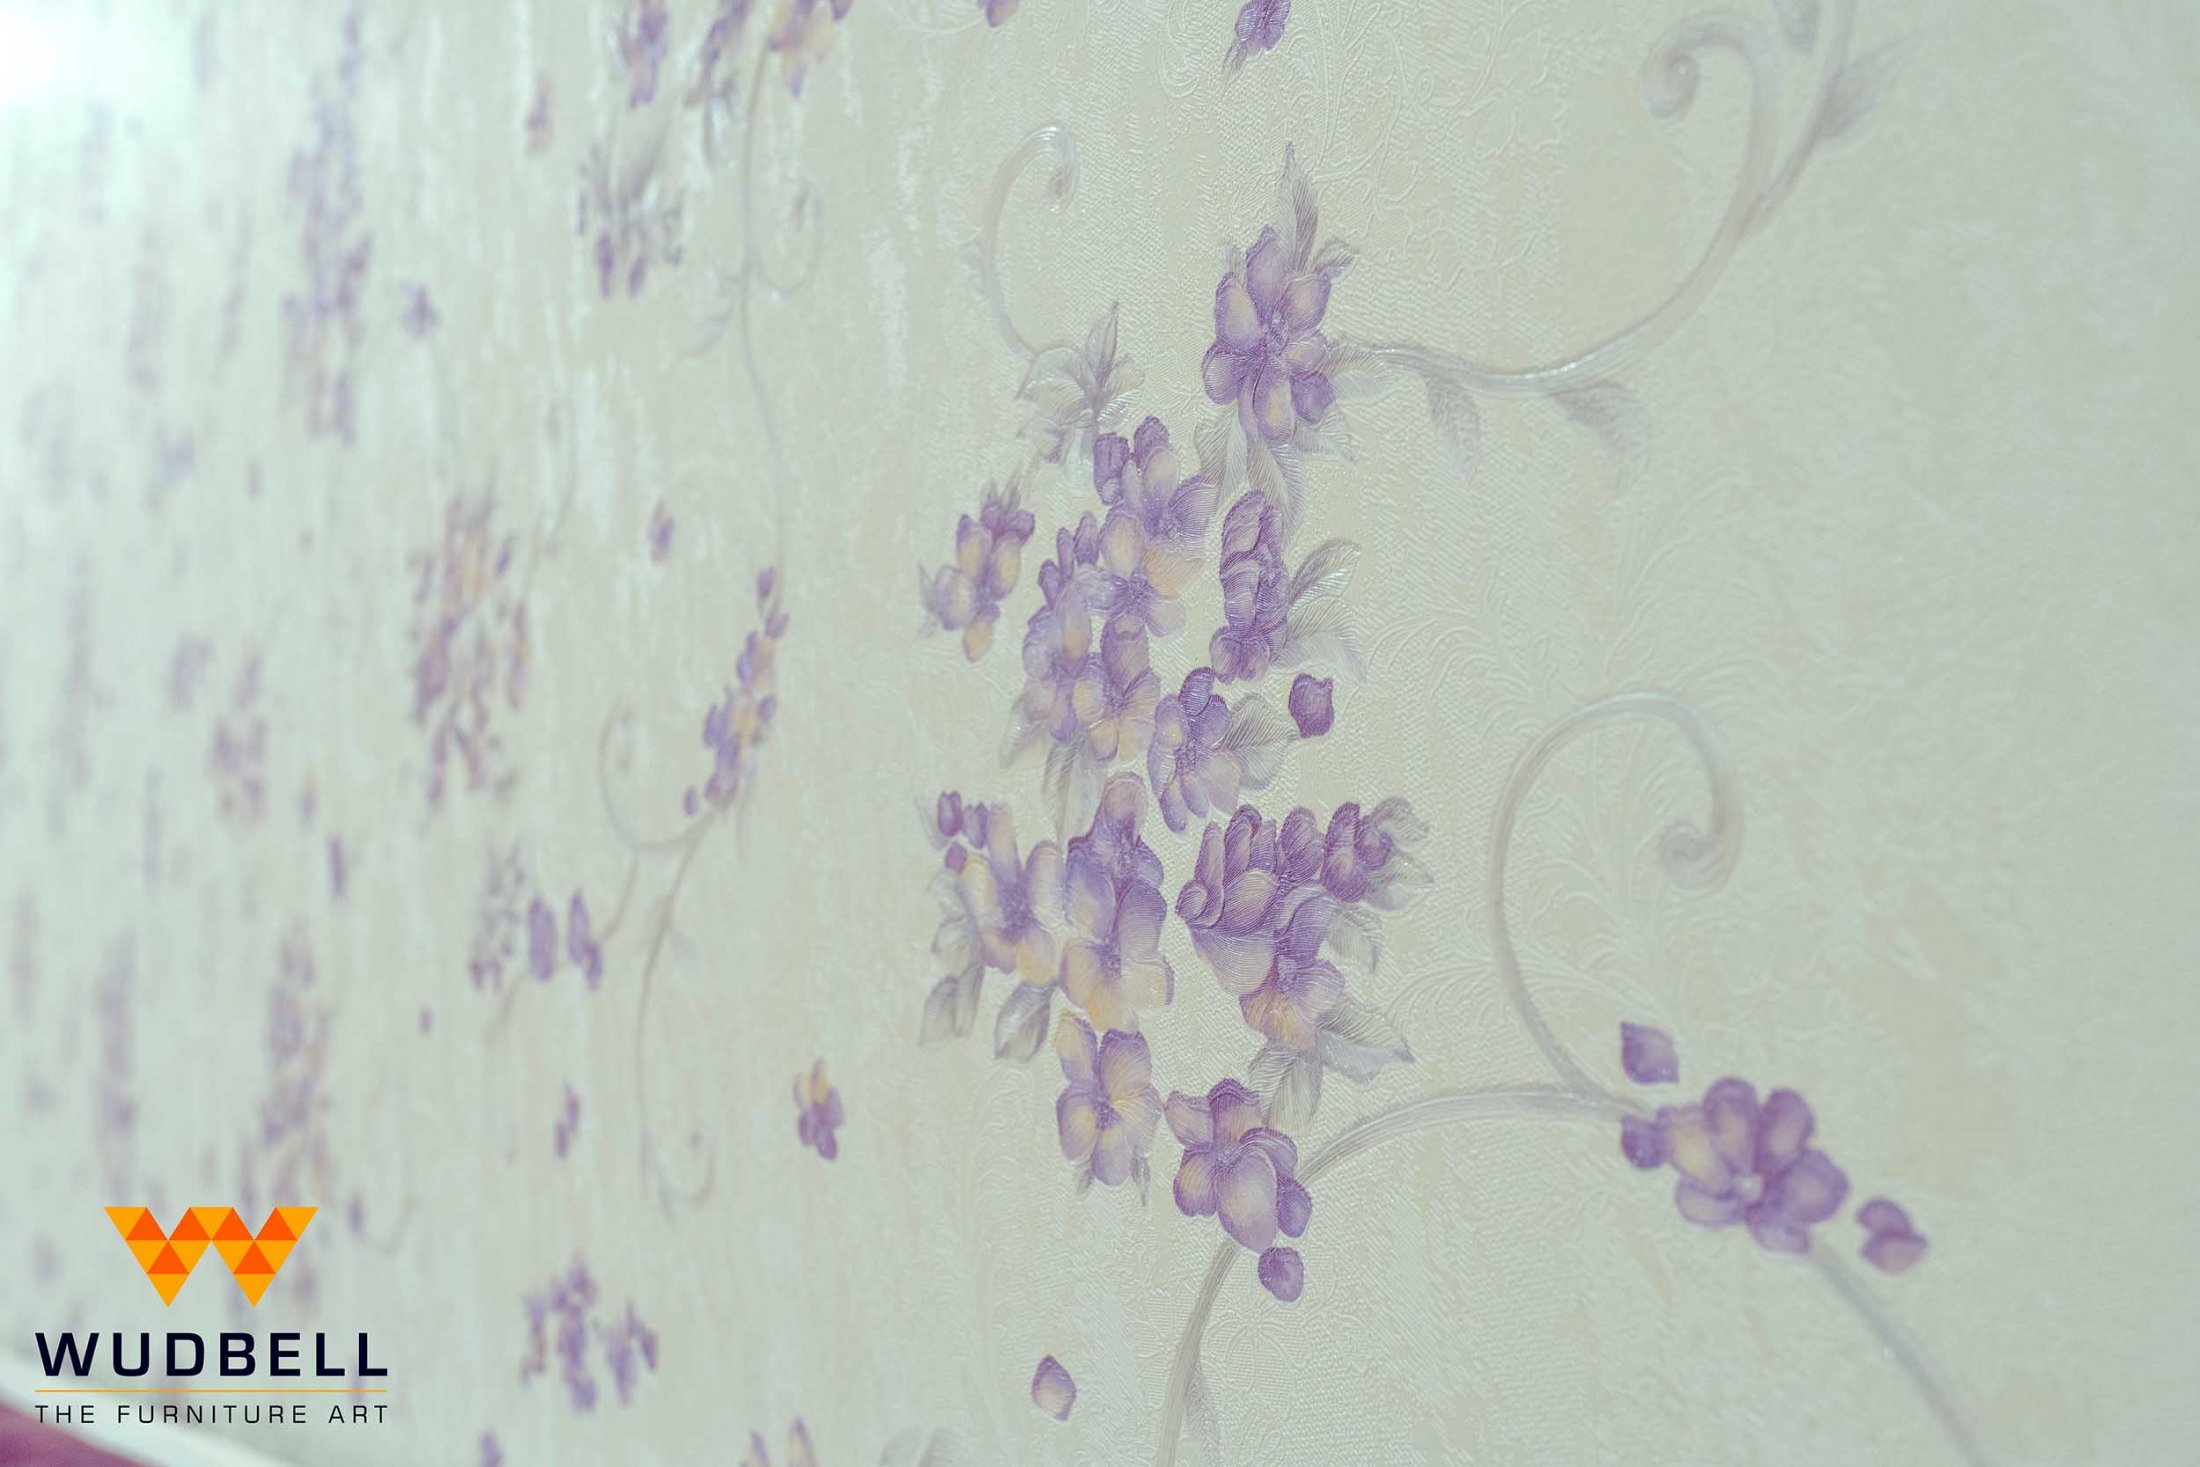 Subtle-yet-trendy floral wallpaper in kids bedroom